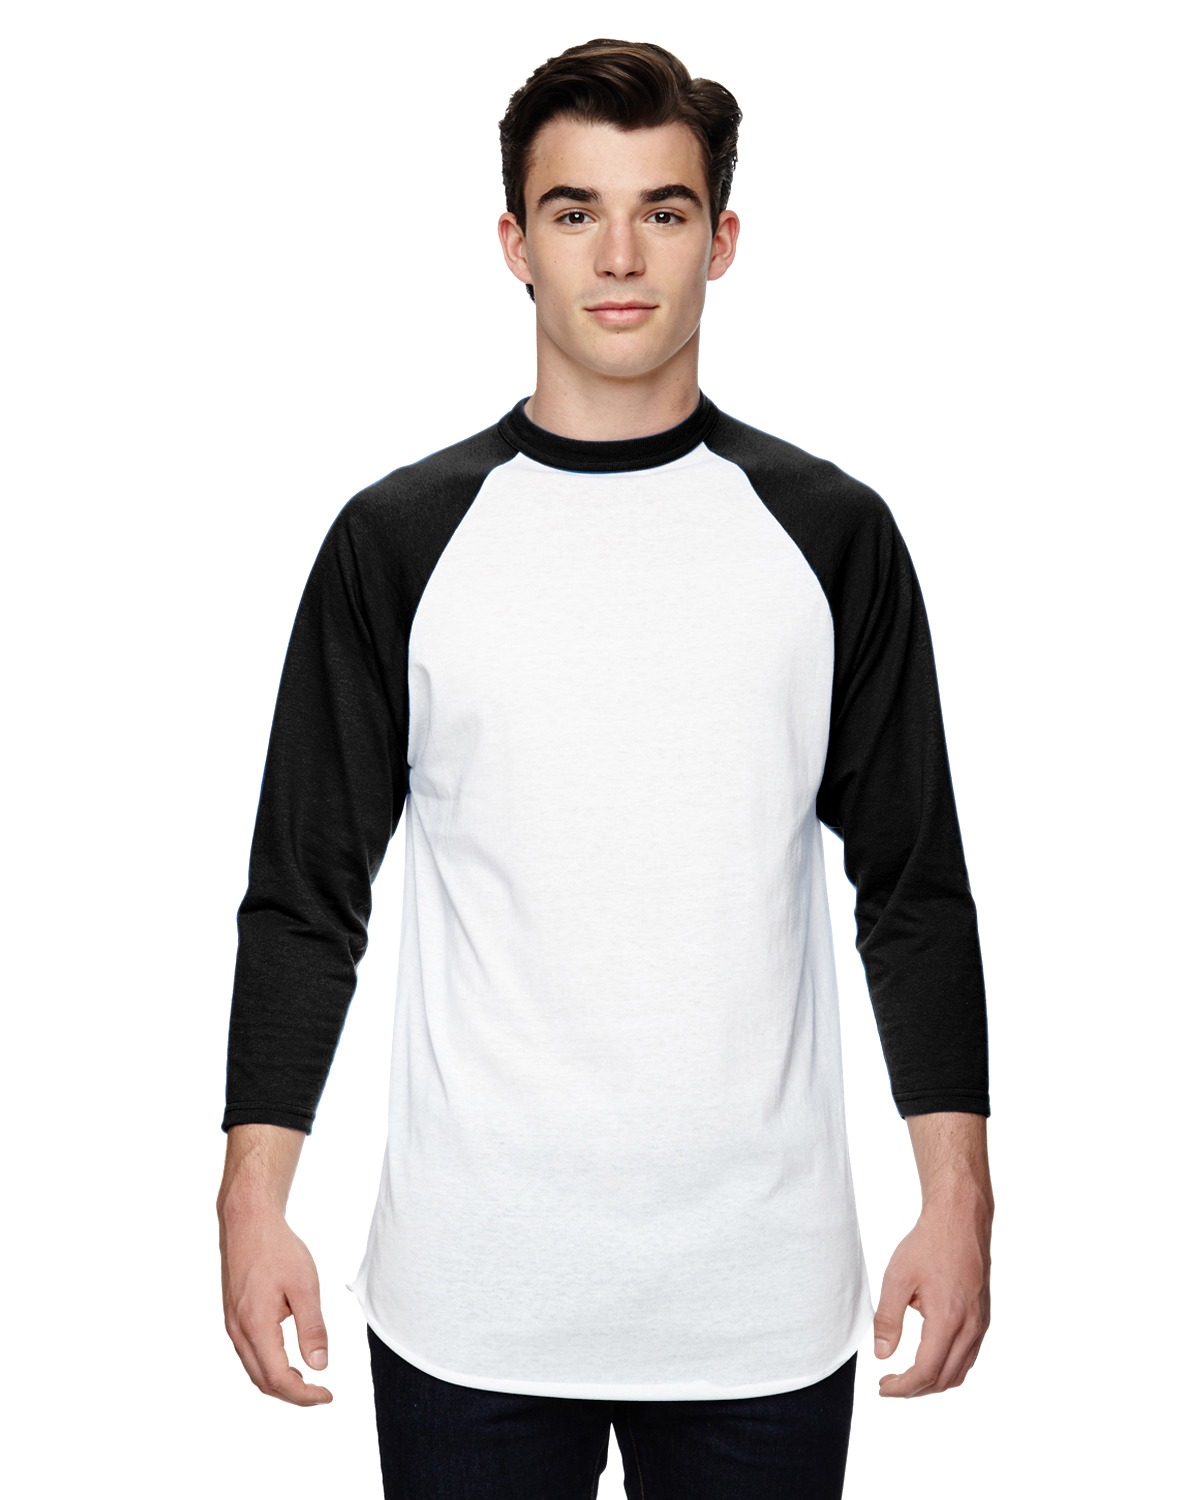 Black Baseball Jersey Shirts Men  Baseball Shirt Black White - T